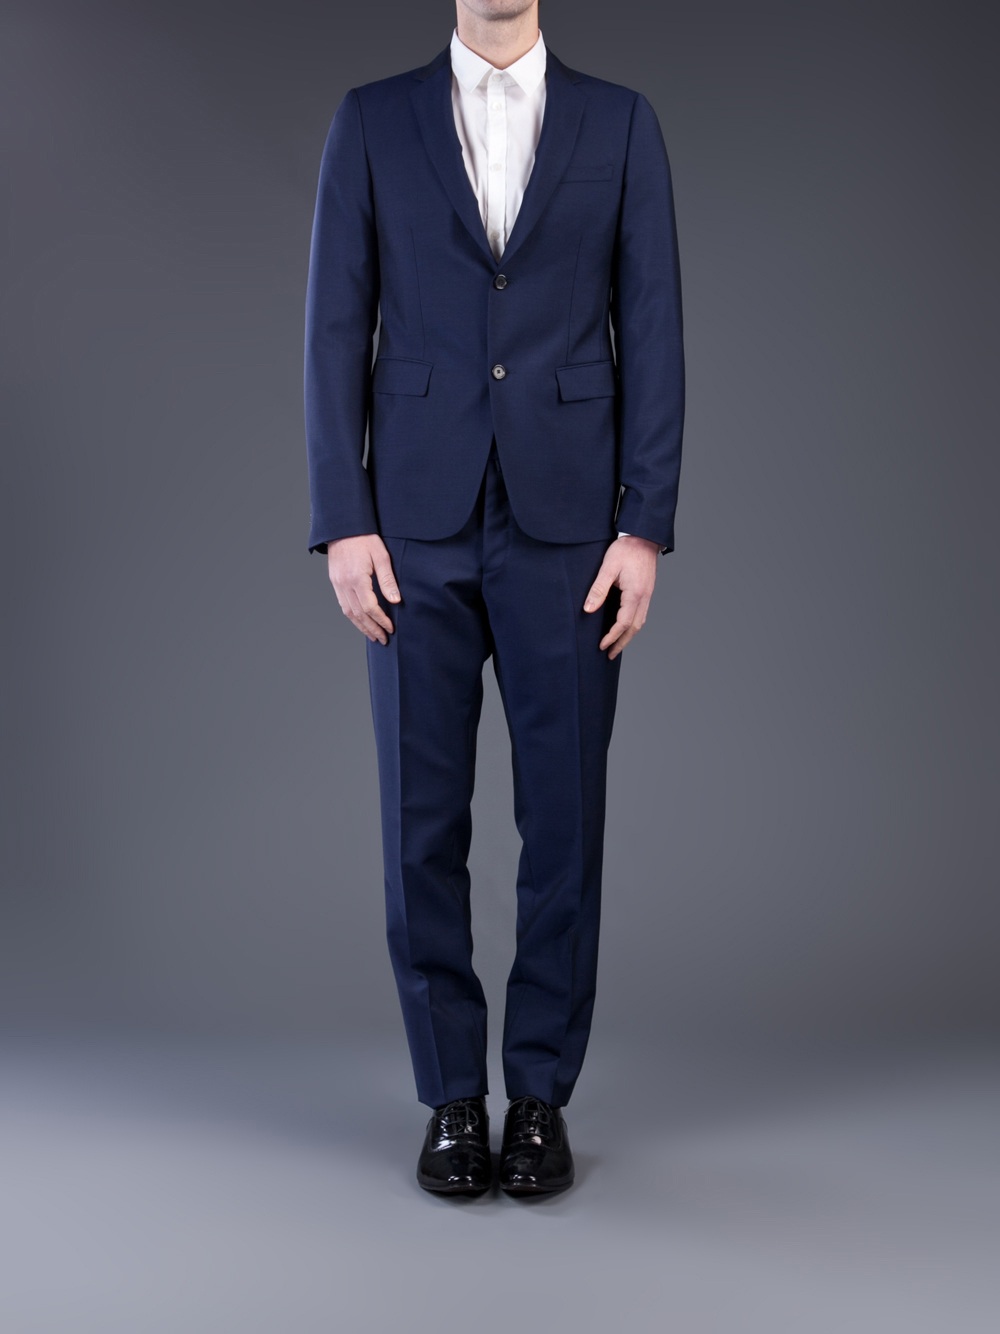 Jil Sander Suit in Navy (Blue) for Men - Lyst